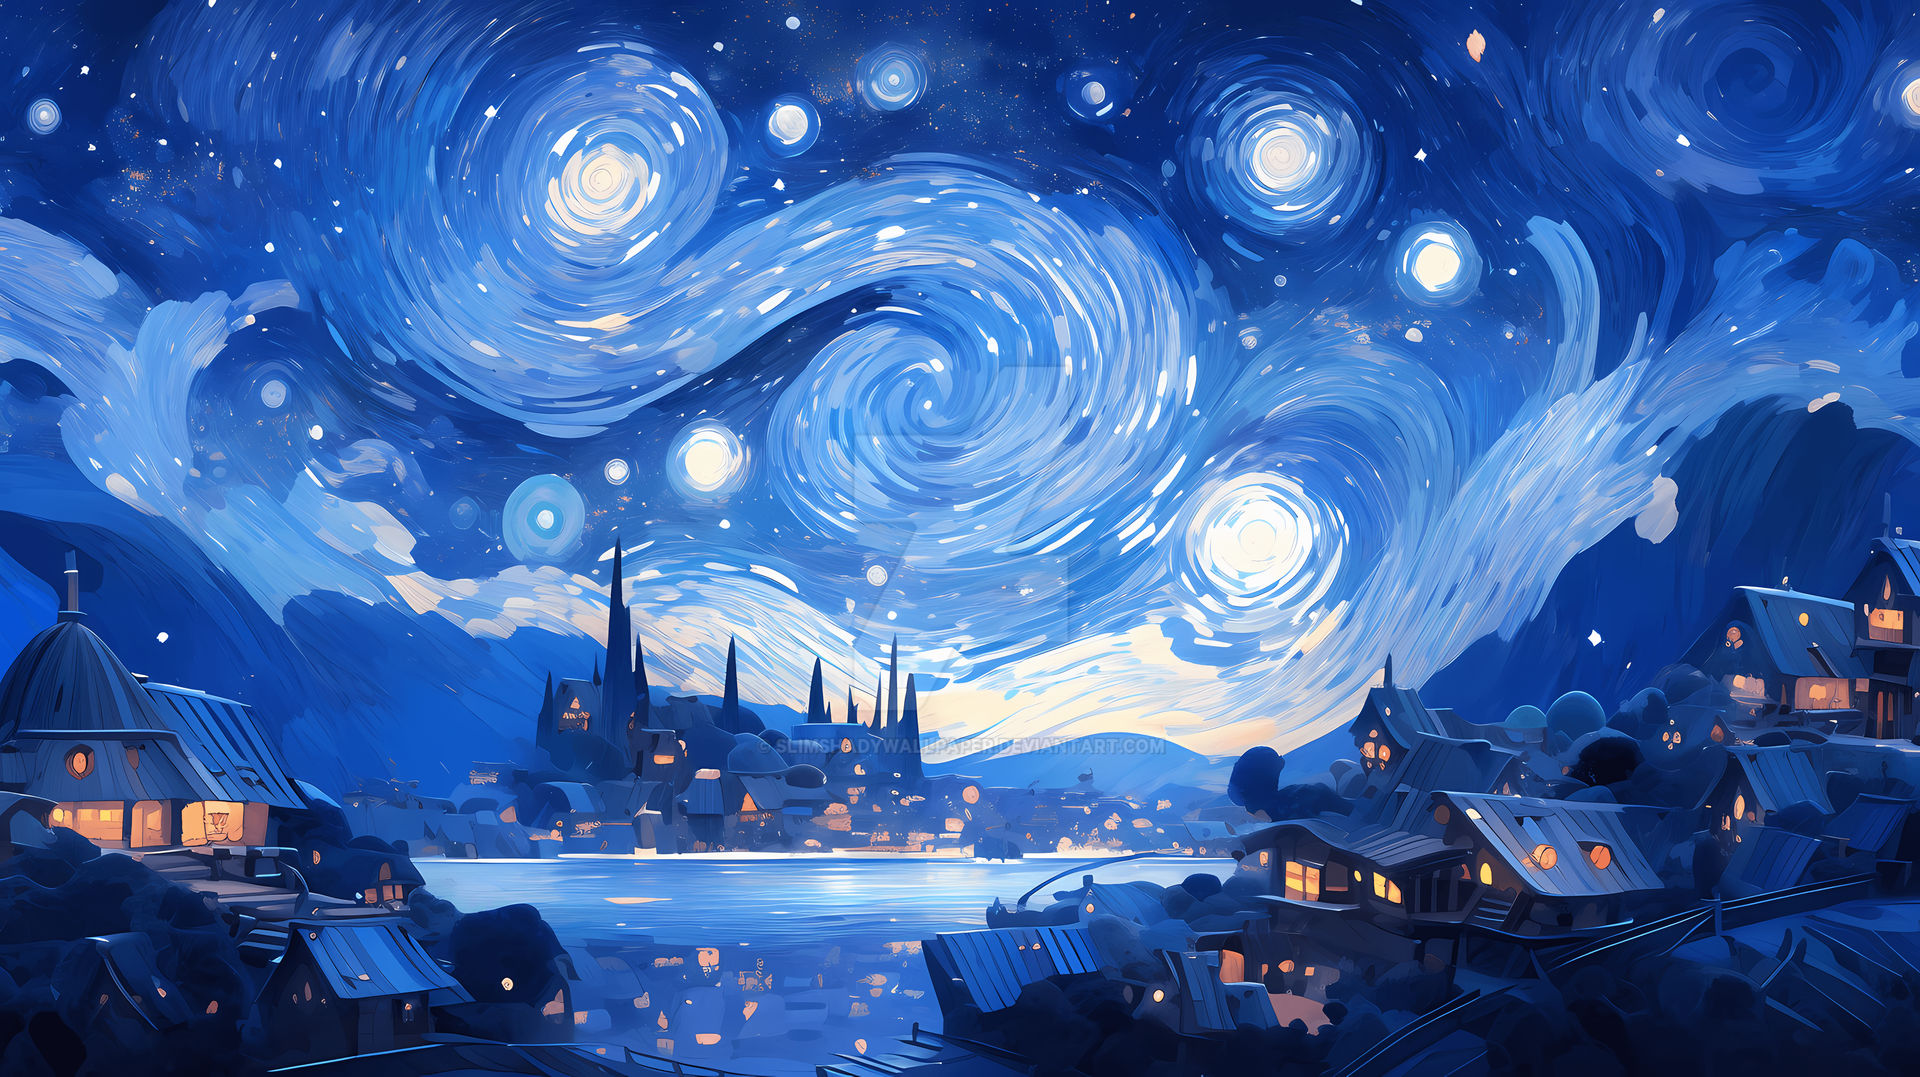 Starry Night in Van Gogh style by SlimShadyWallpaper on DeviantArt